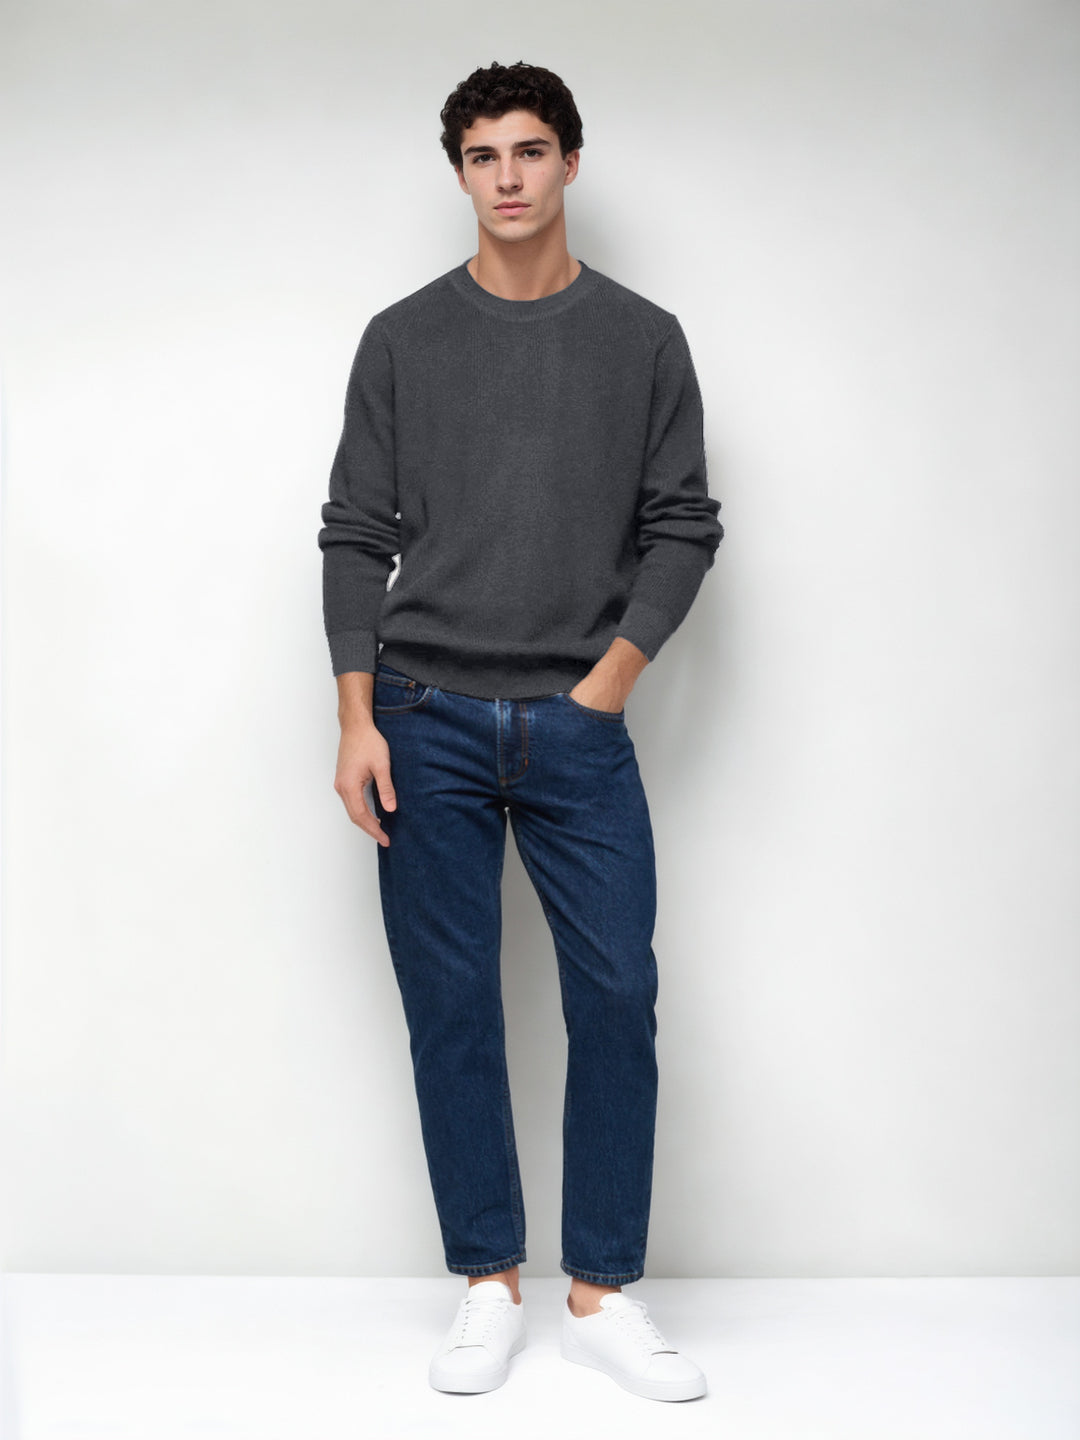 Hemsters Dark grey Knitted Full Sleevs Sweatshirt For Men